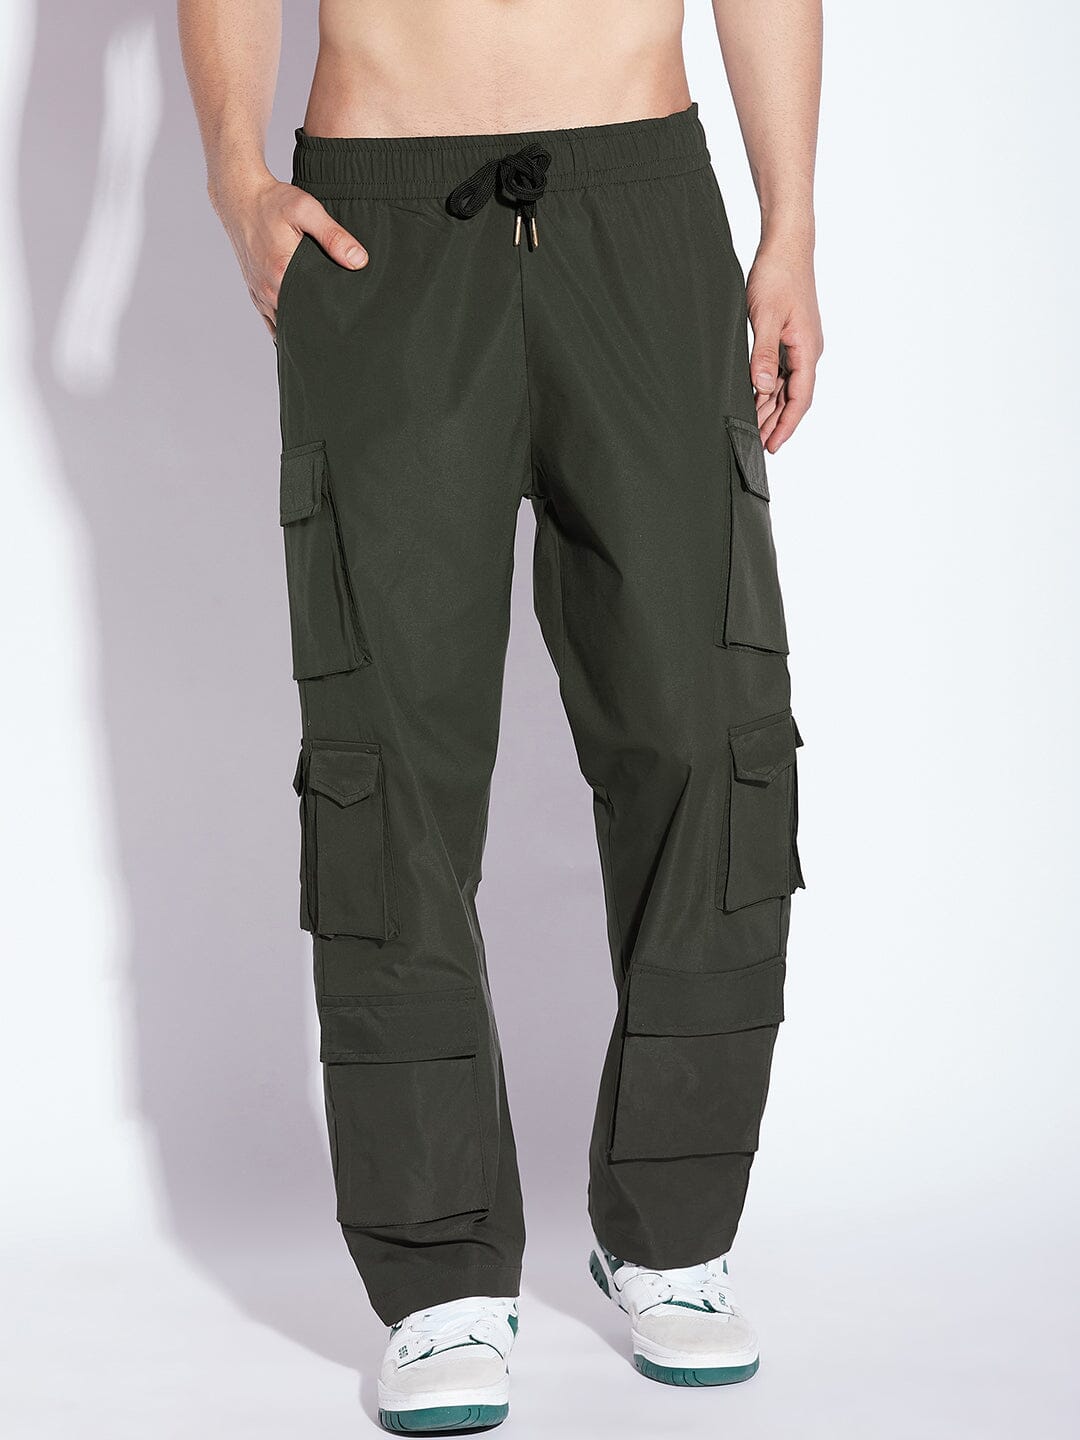 YouLoveIt Men's Casual Work Cargo Pants Outdoor Hiking Pants Multi Pocket  Military Camo Combat Work Pants Tactical Pants Army Camo Pants with 6/8  Pockets - Walmart.com